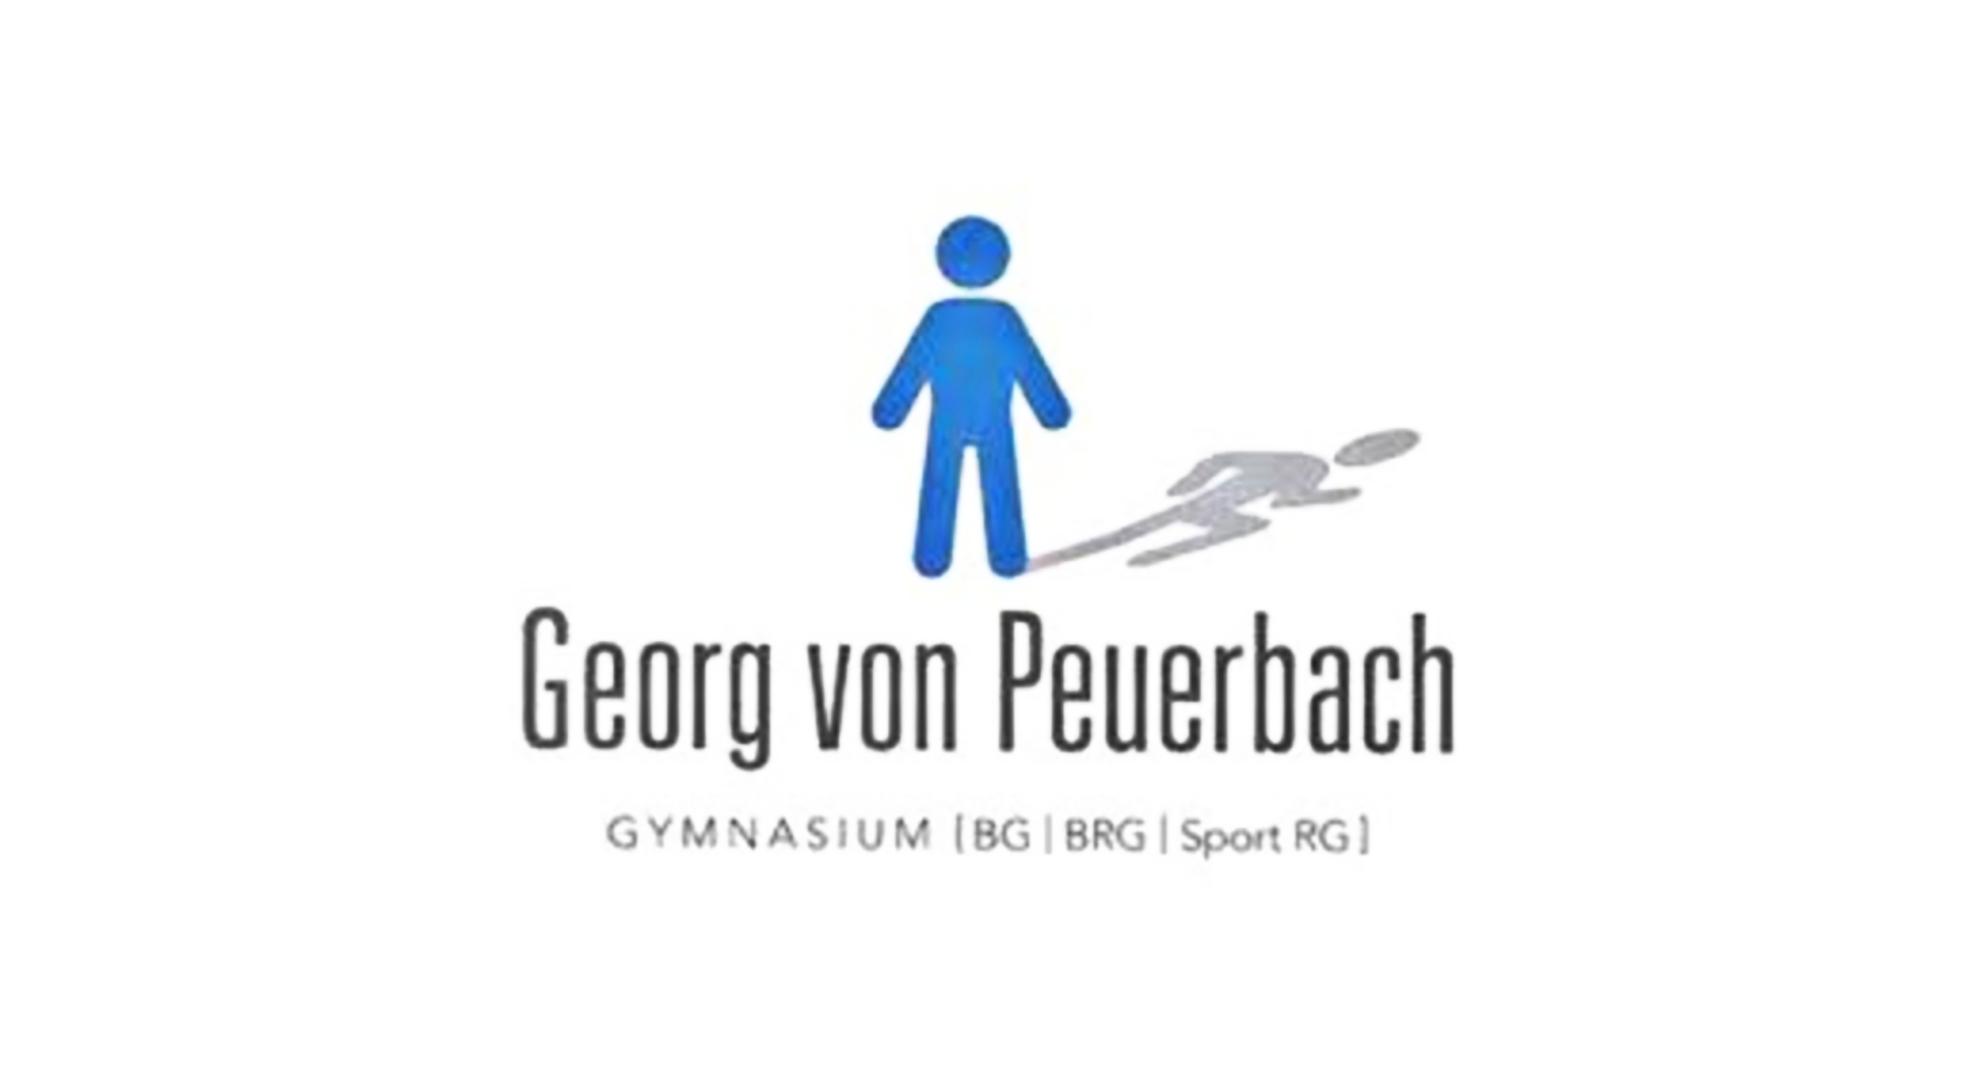 Instr. FIT Athletik, Fitness und Koordination Peuerbach-Gymnasium 2022